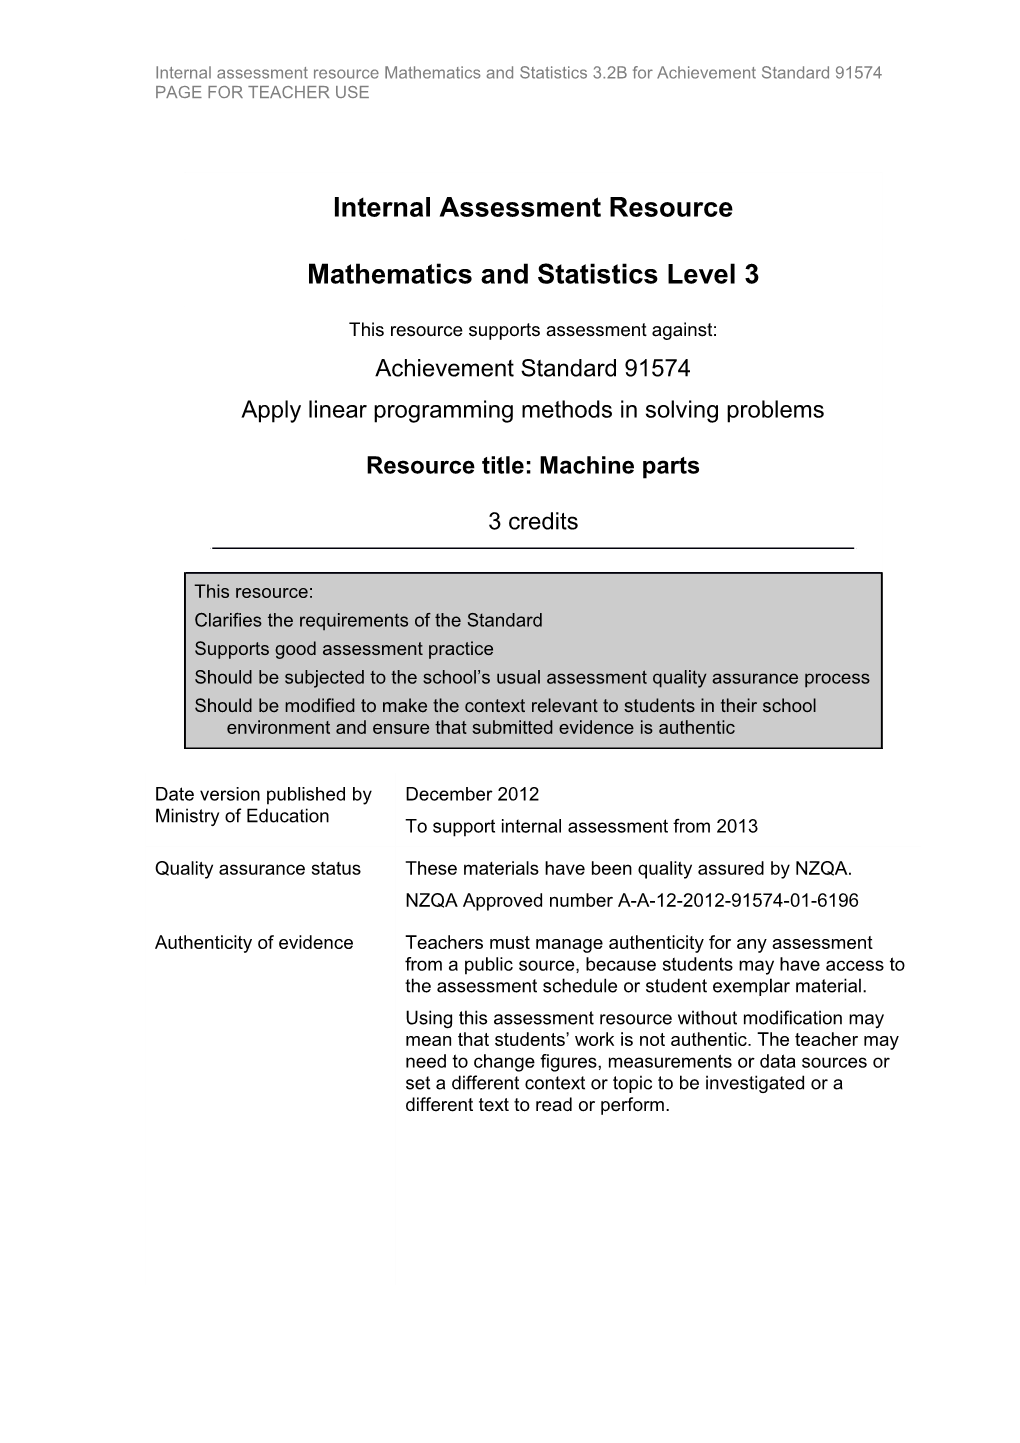 Level 3 Mathematics and Statistics Internal Assessment Resource s1